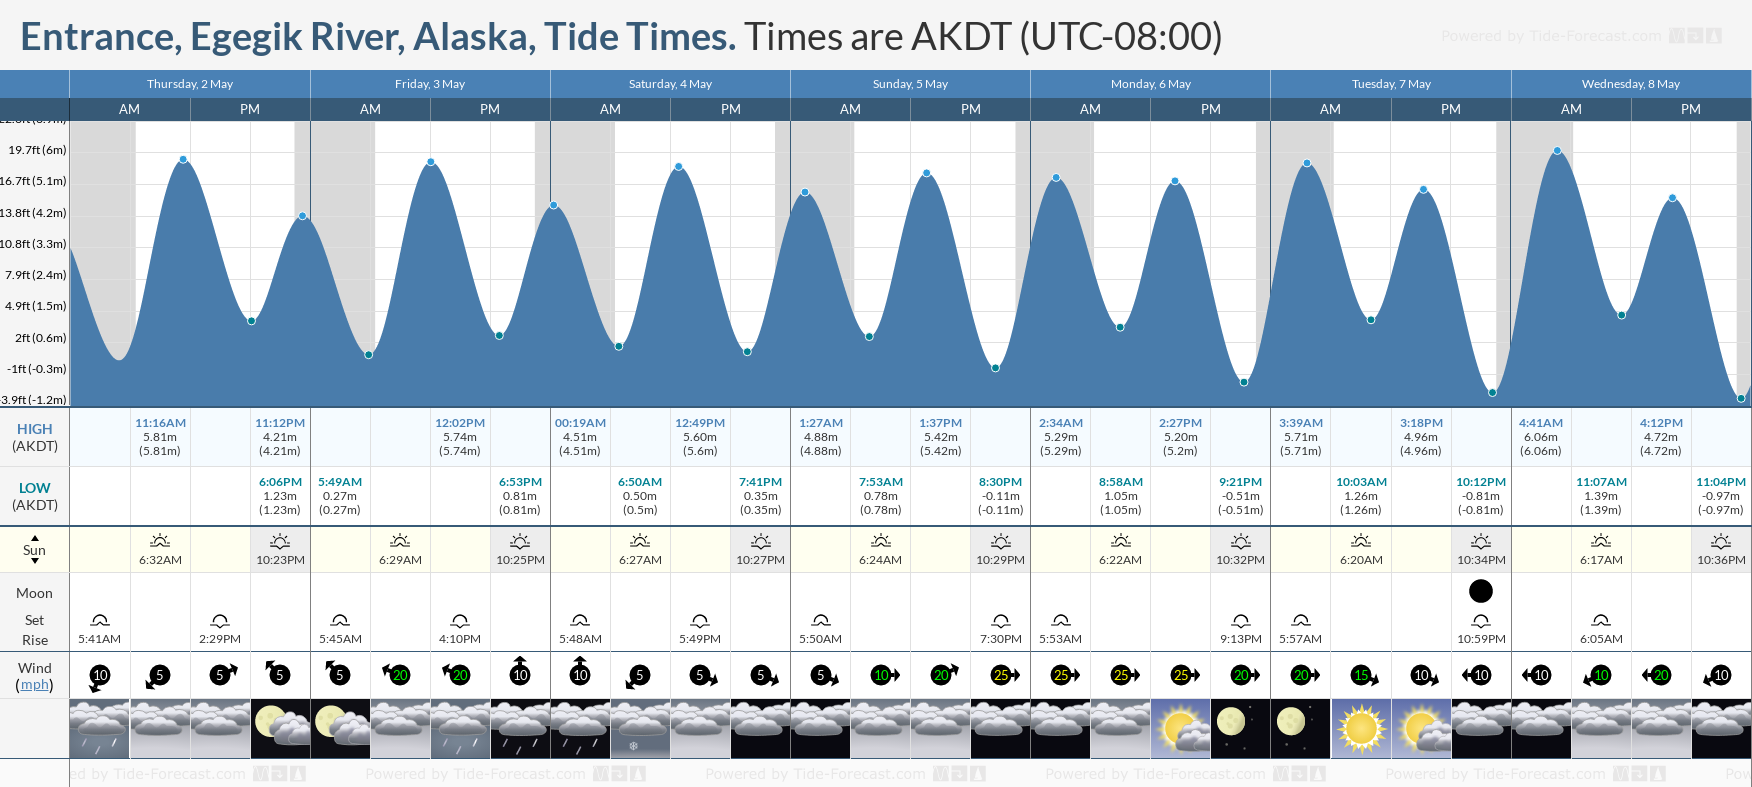 Entrance, Egegik River, Alaska Tide Chart including high and low tide tide times for the next 7 days